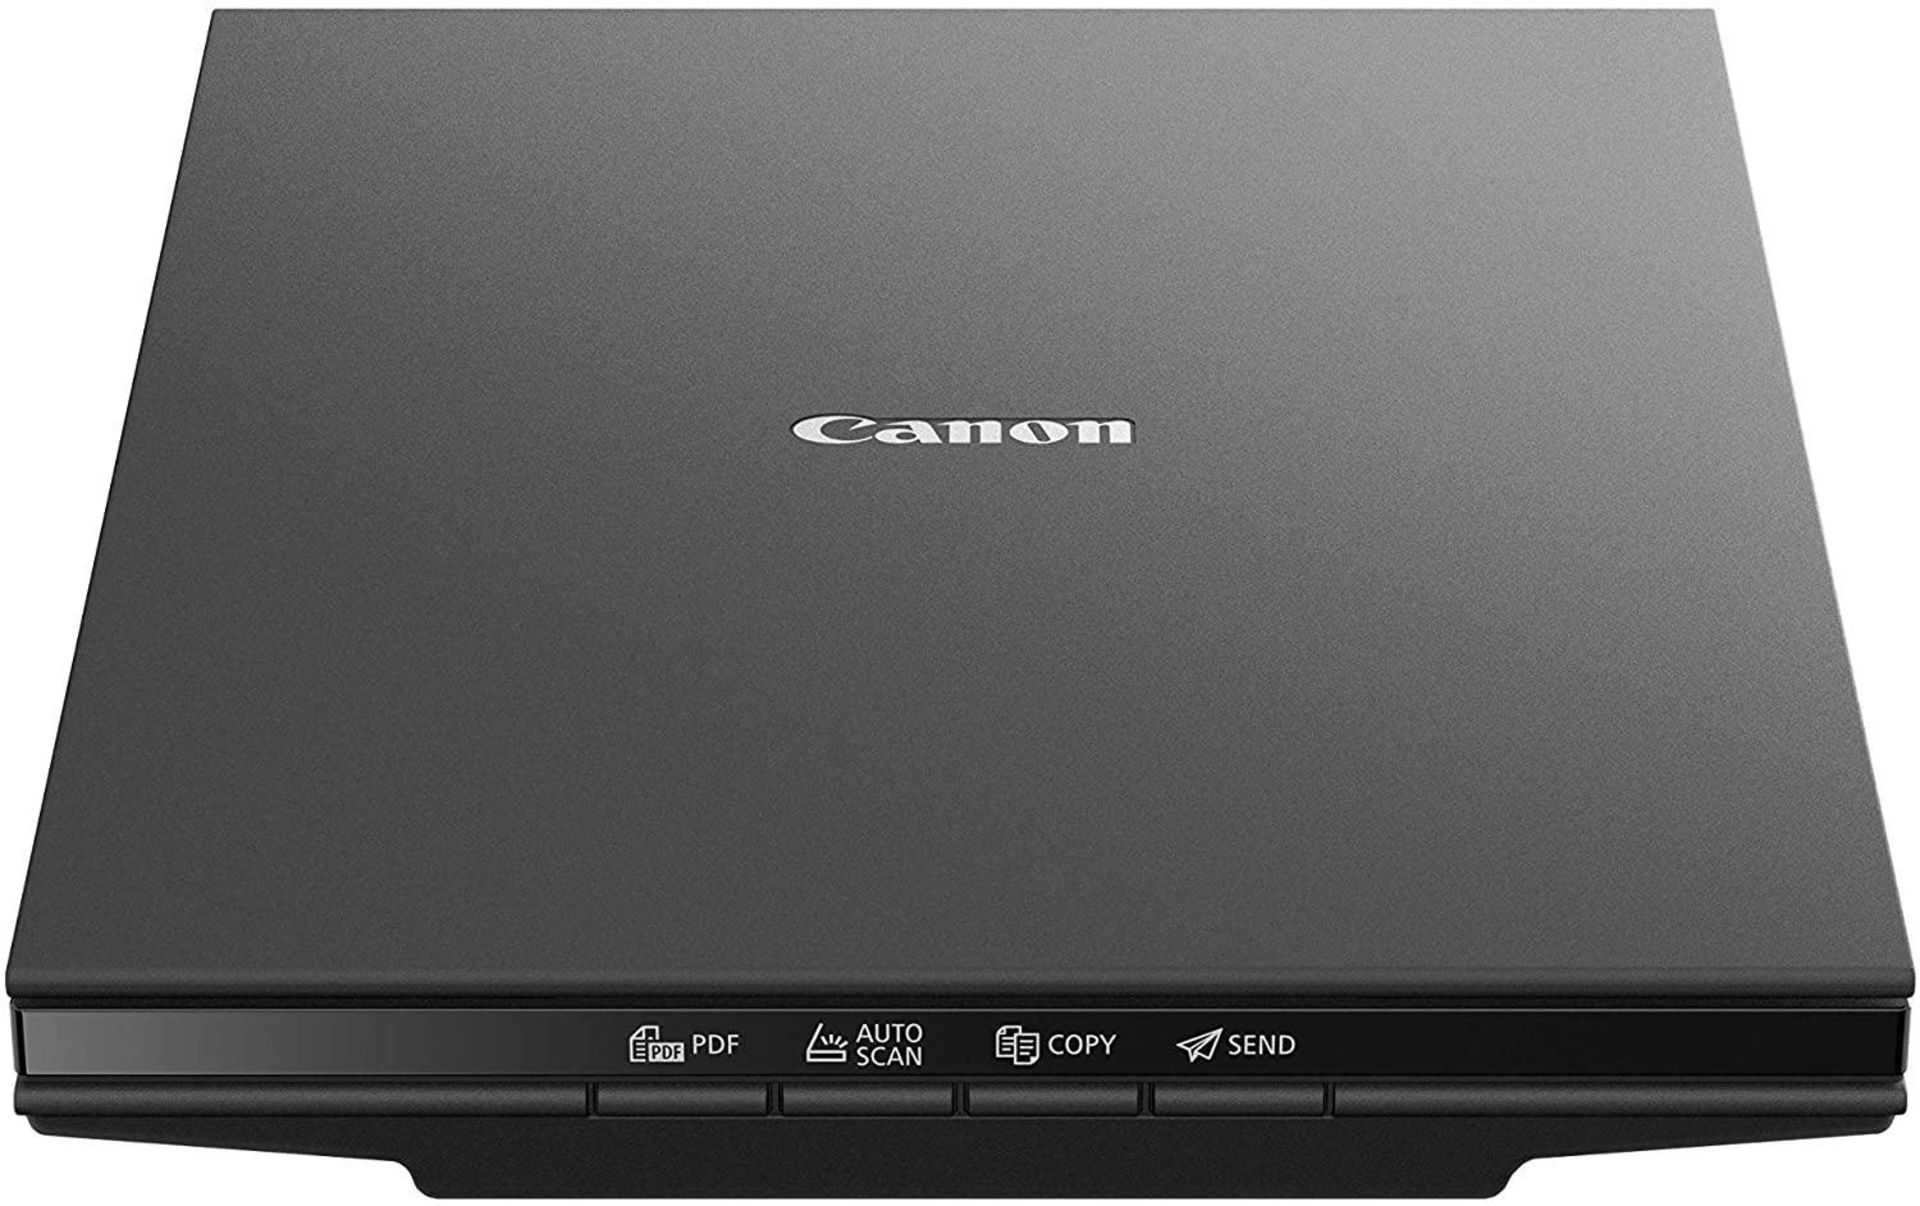 Canon LiDE 300 Colour Flatbed Scanner - Black, 2400x2400 dpi - £51.59 RRP